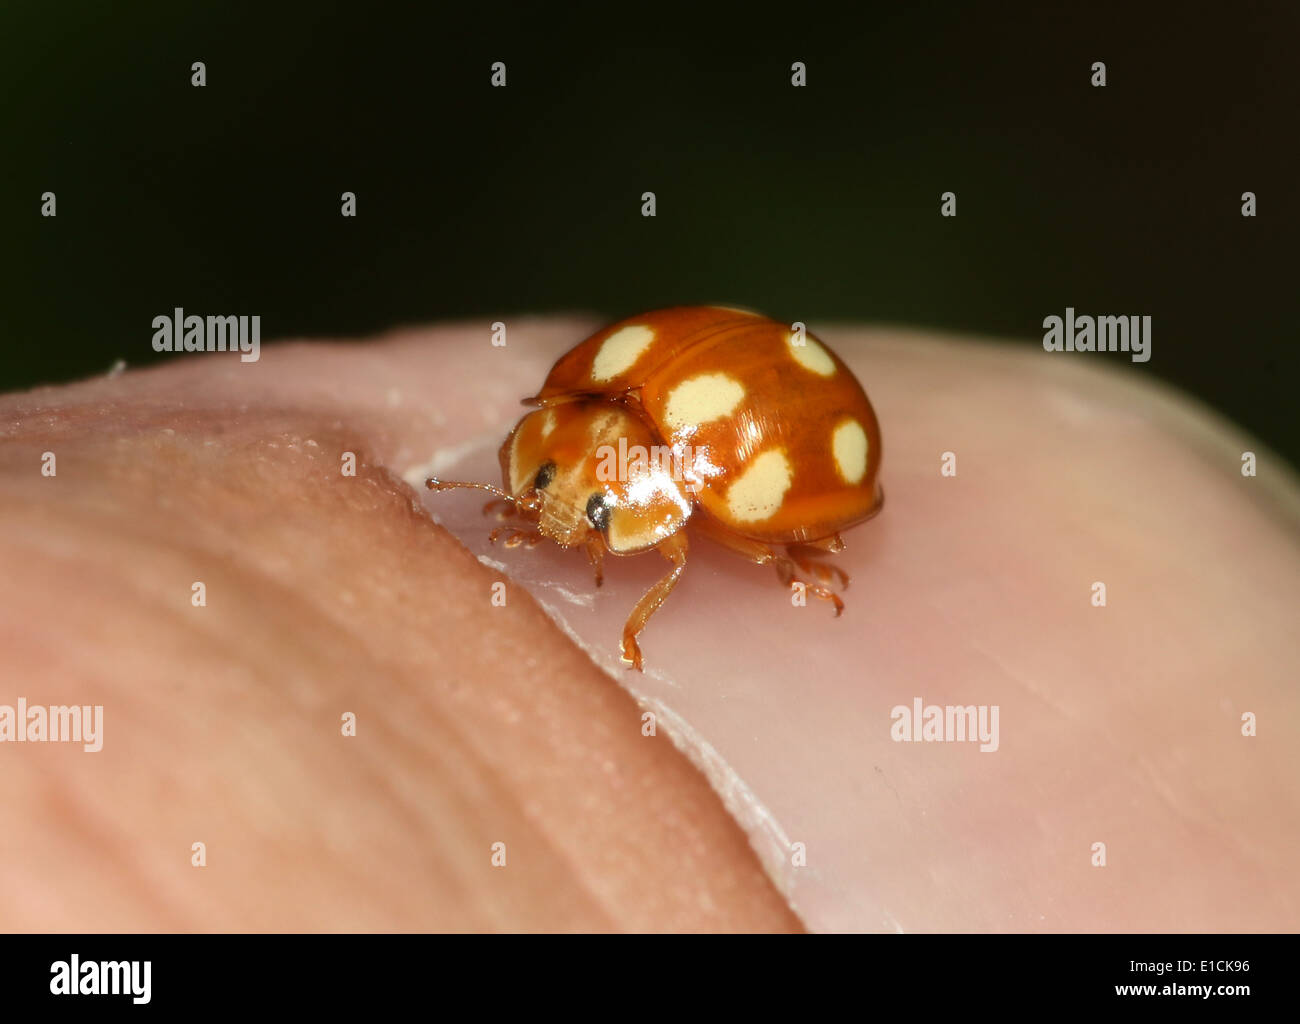 The minute orange 10 spot ladybird / ladybug (Calvia decemguttata) posing on my thumbnail Stock Photo